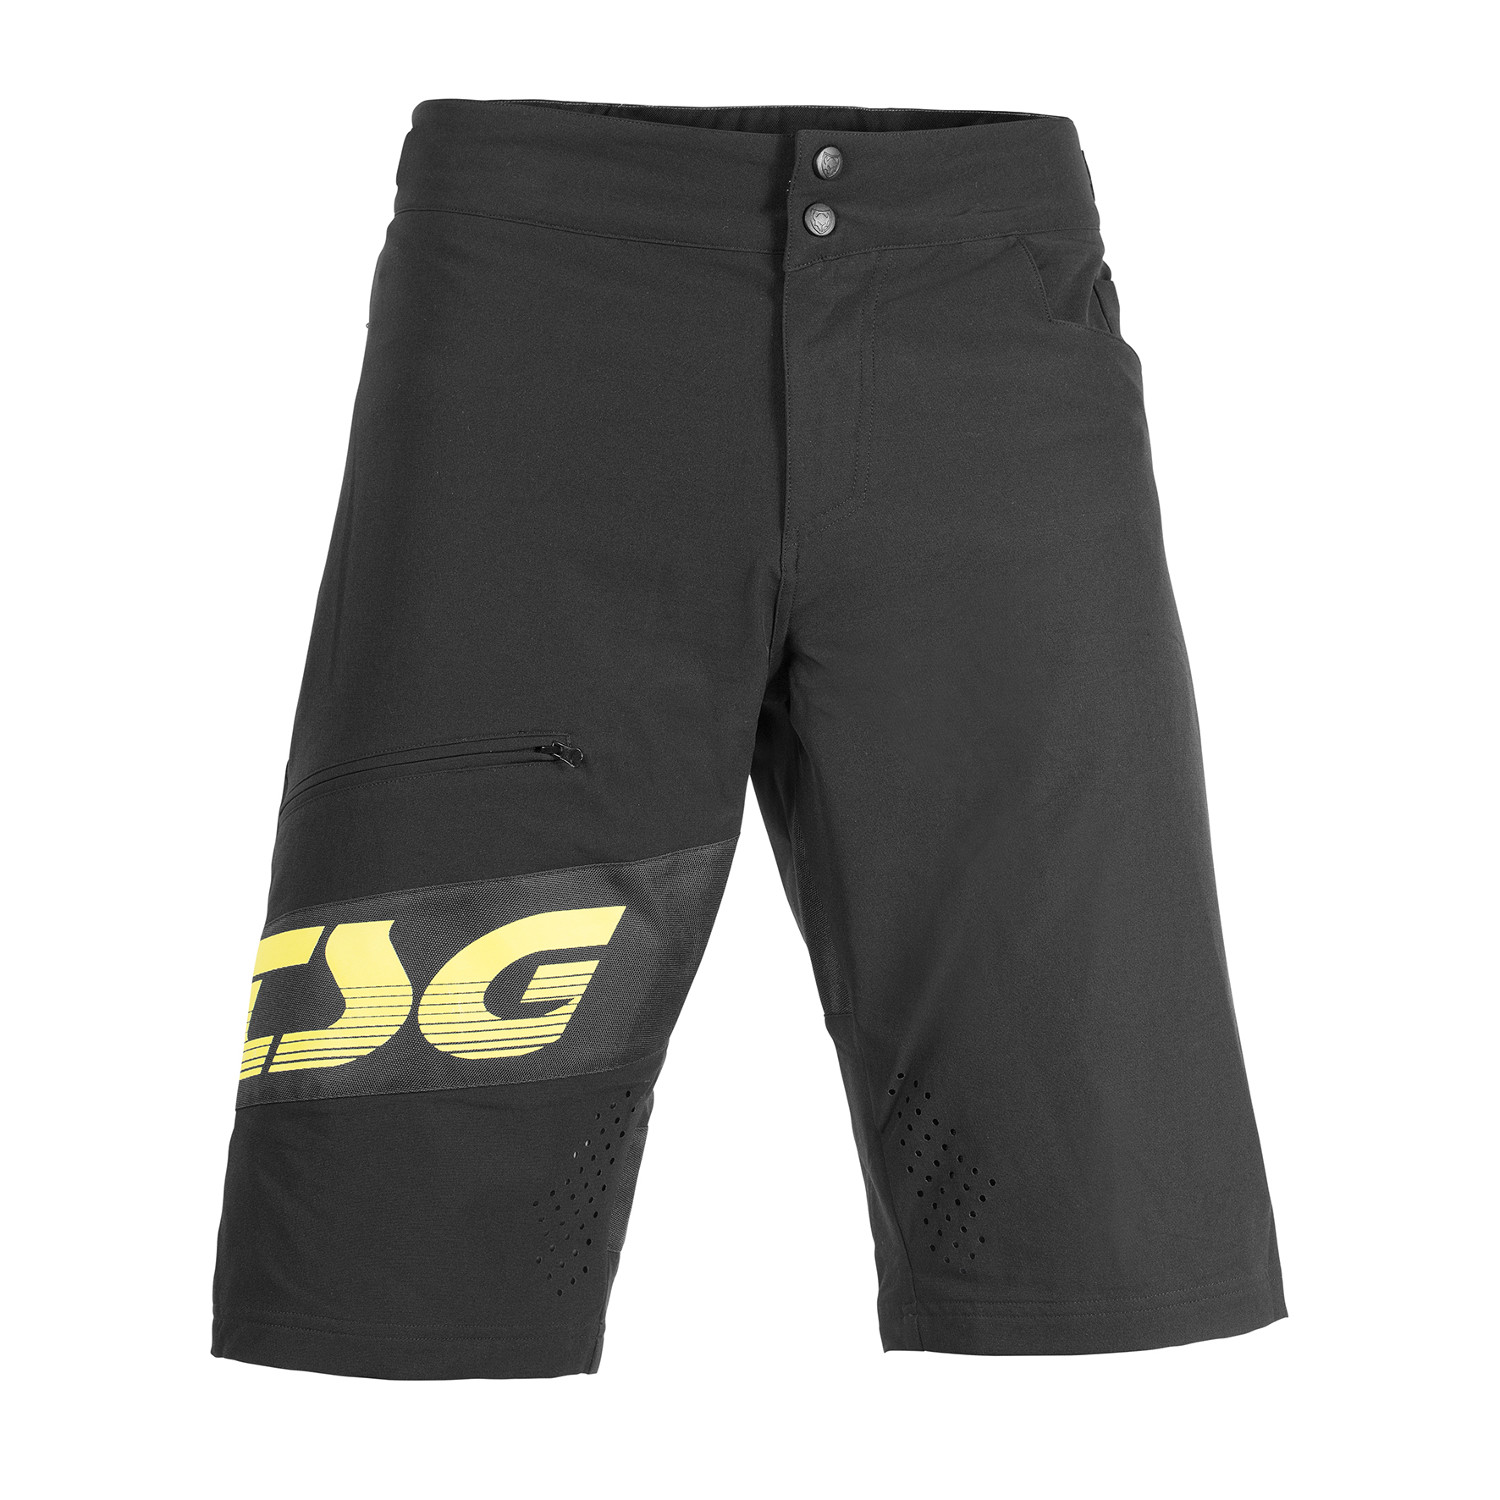 TSG Bike Shorts SP1 Black/Yellow